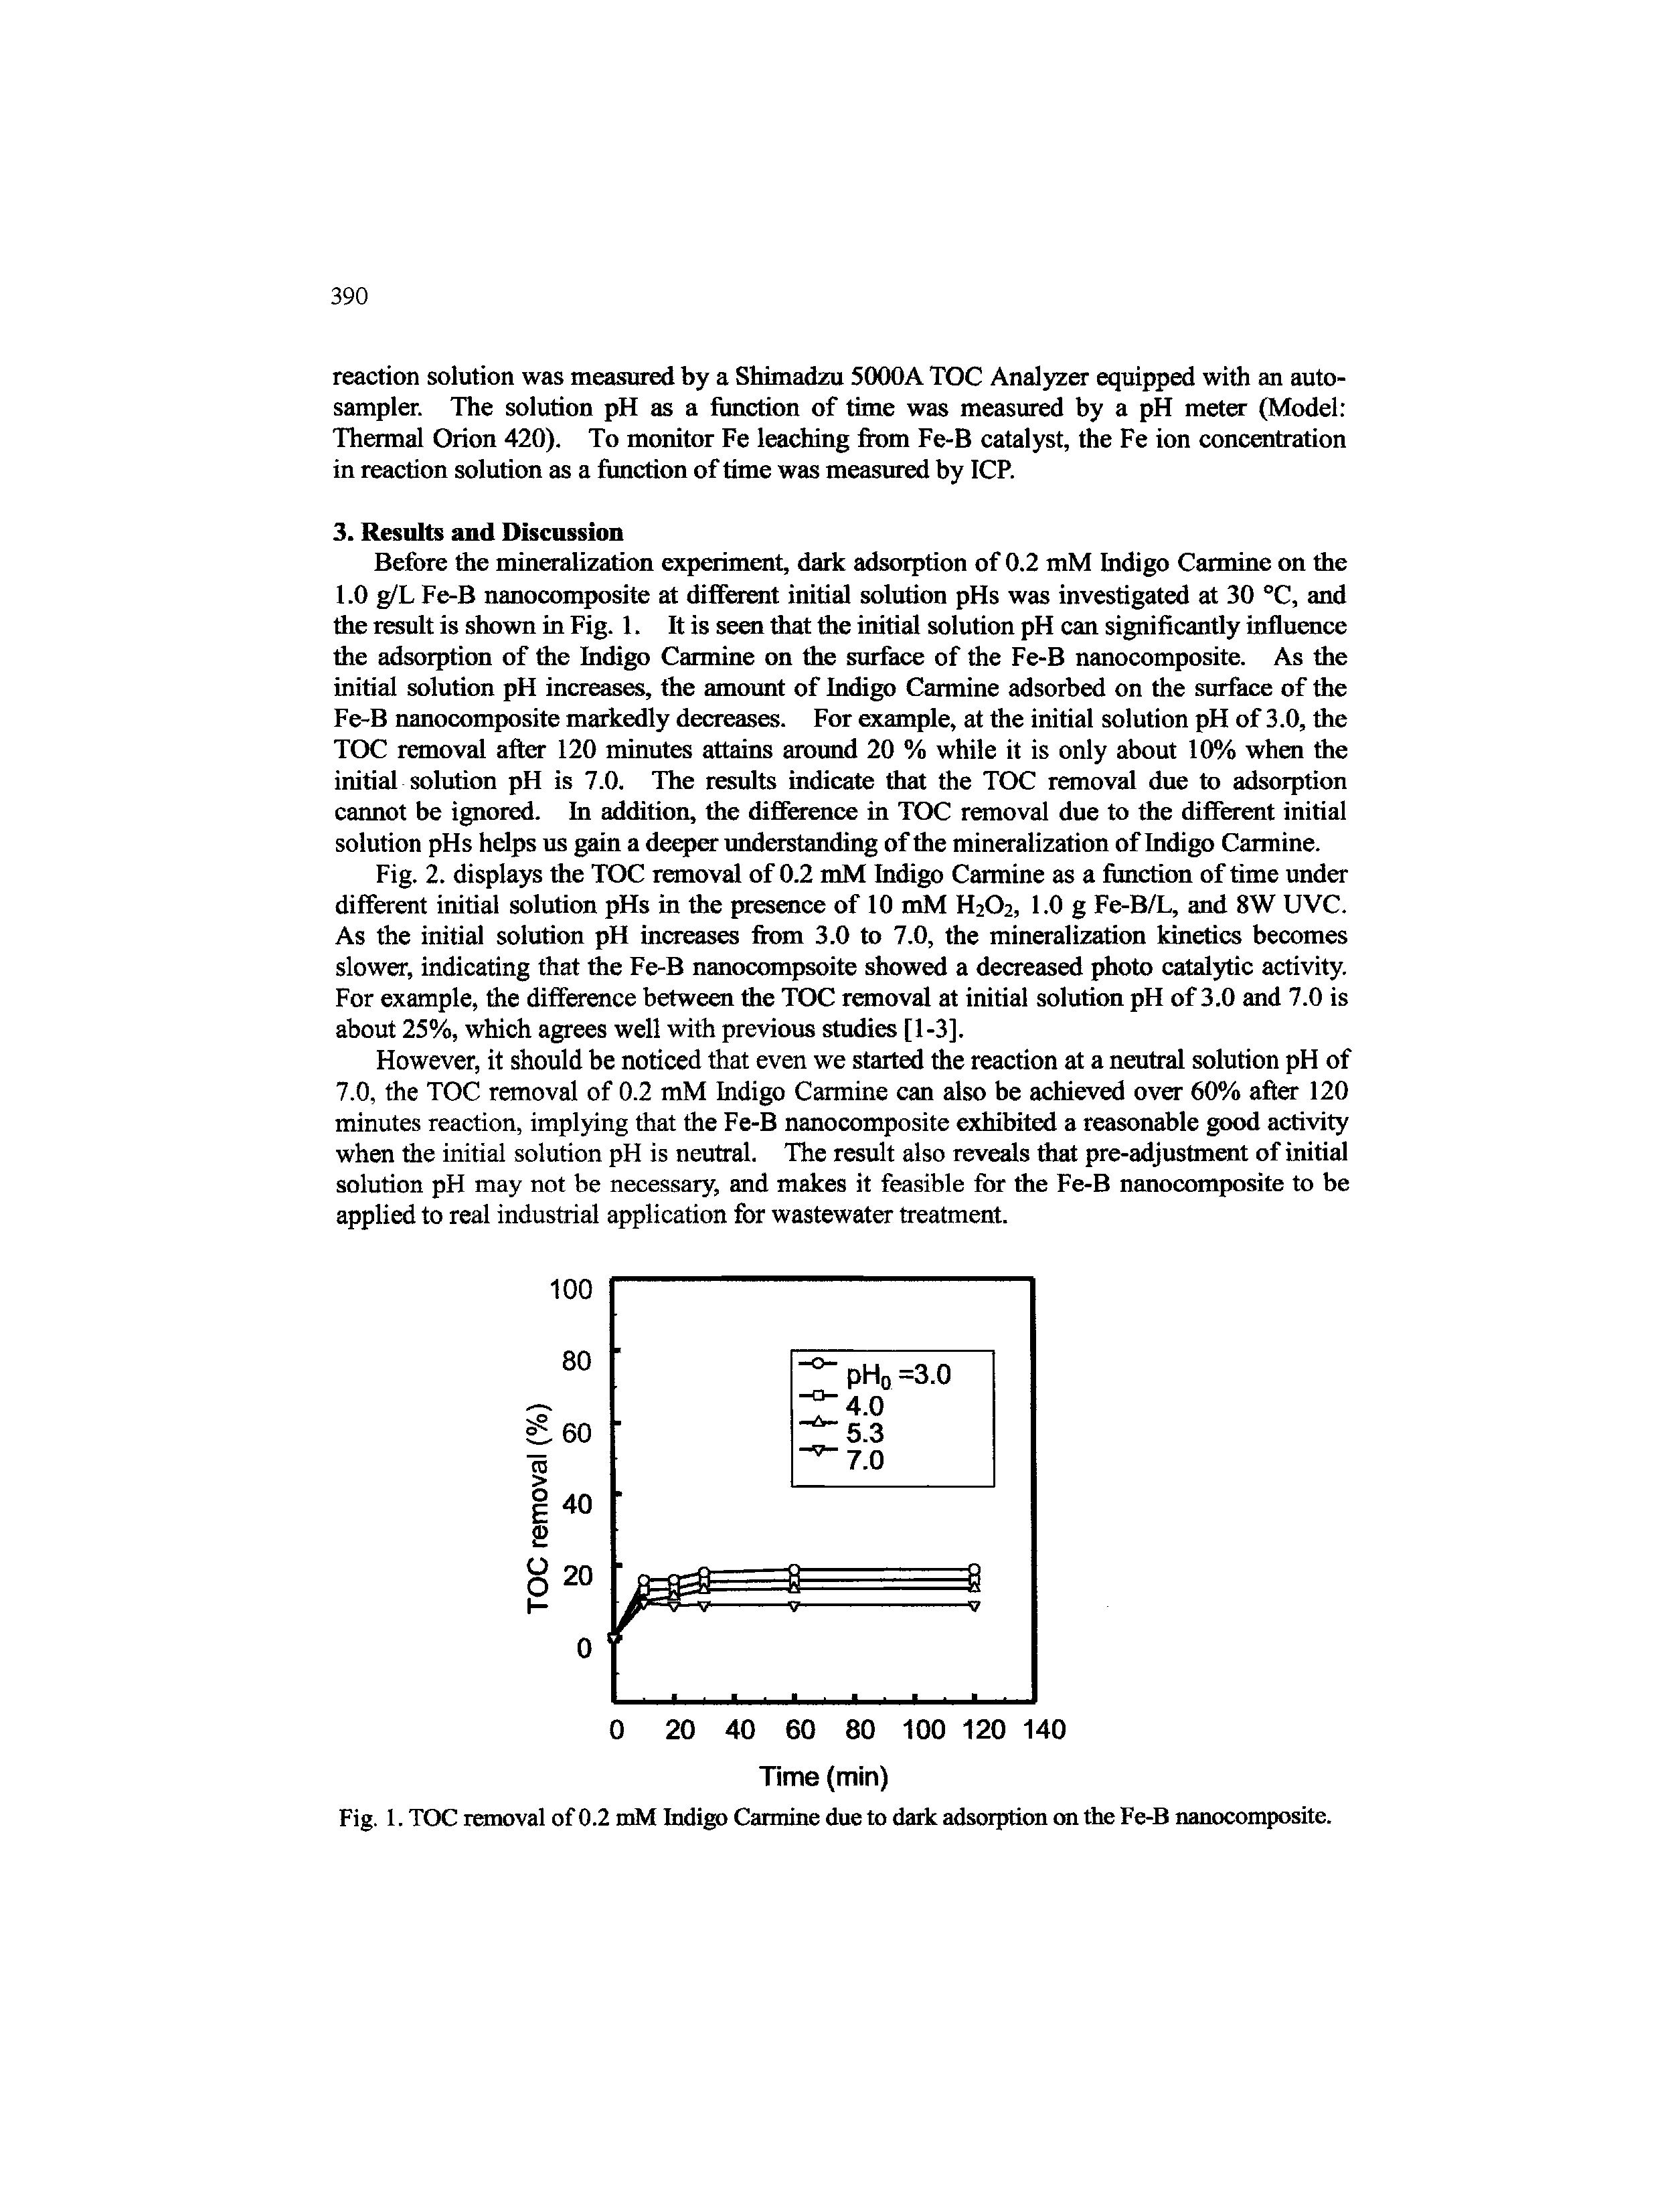 Fig. 1. TOC removal of 0.2 mM Indigo Carmine due to dark adsorption on the Fe-B nanocomposite.